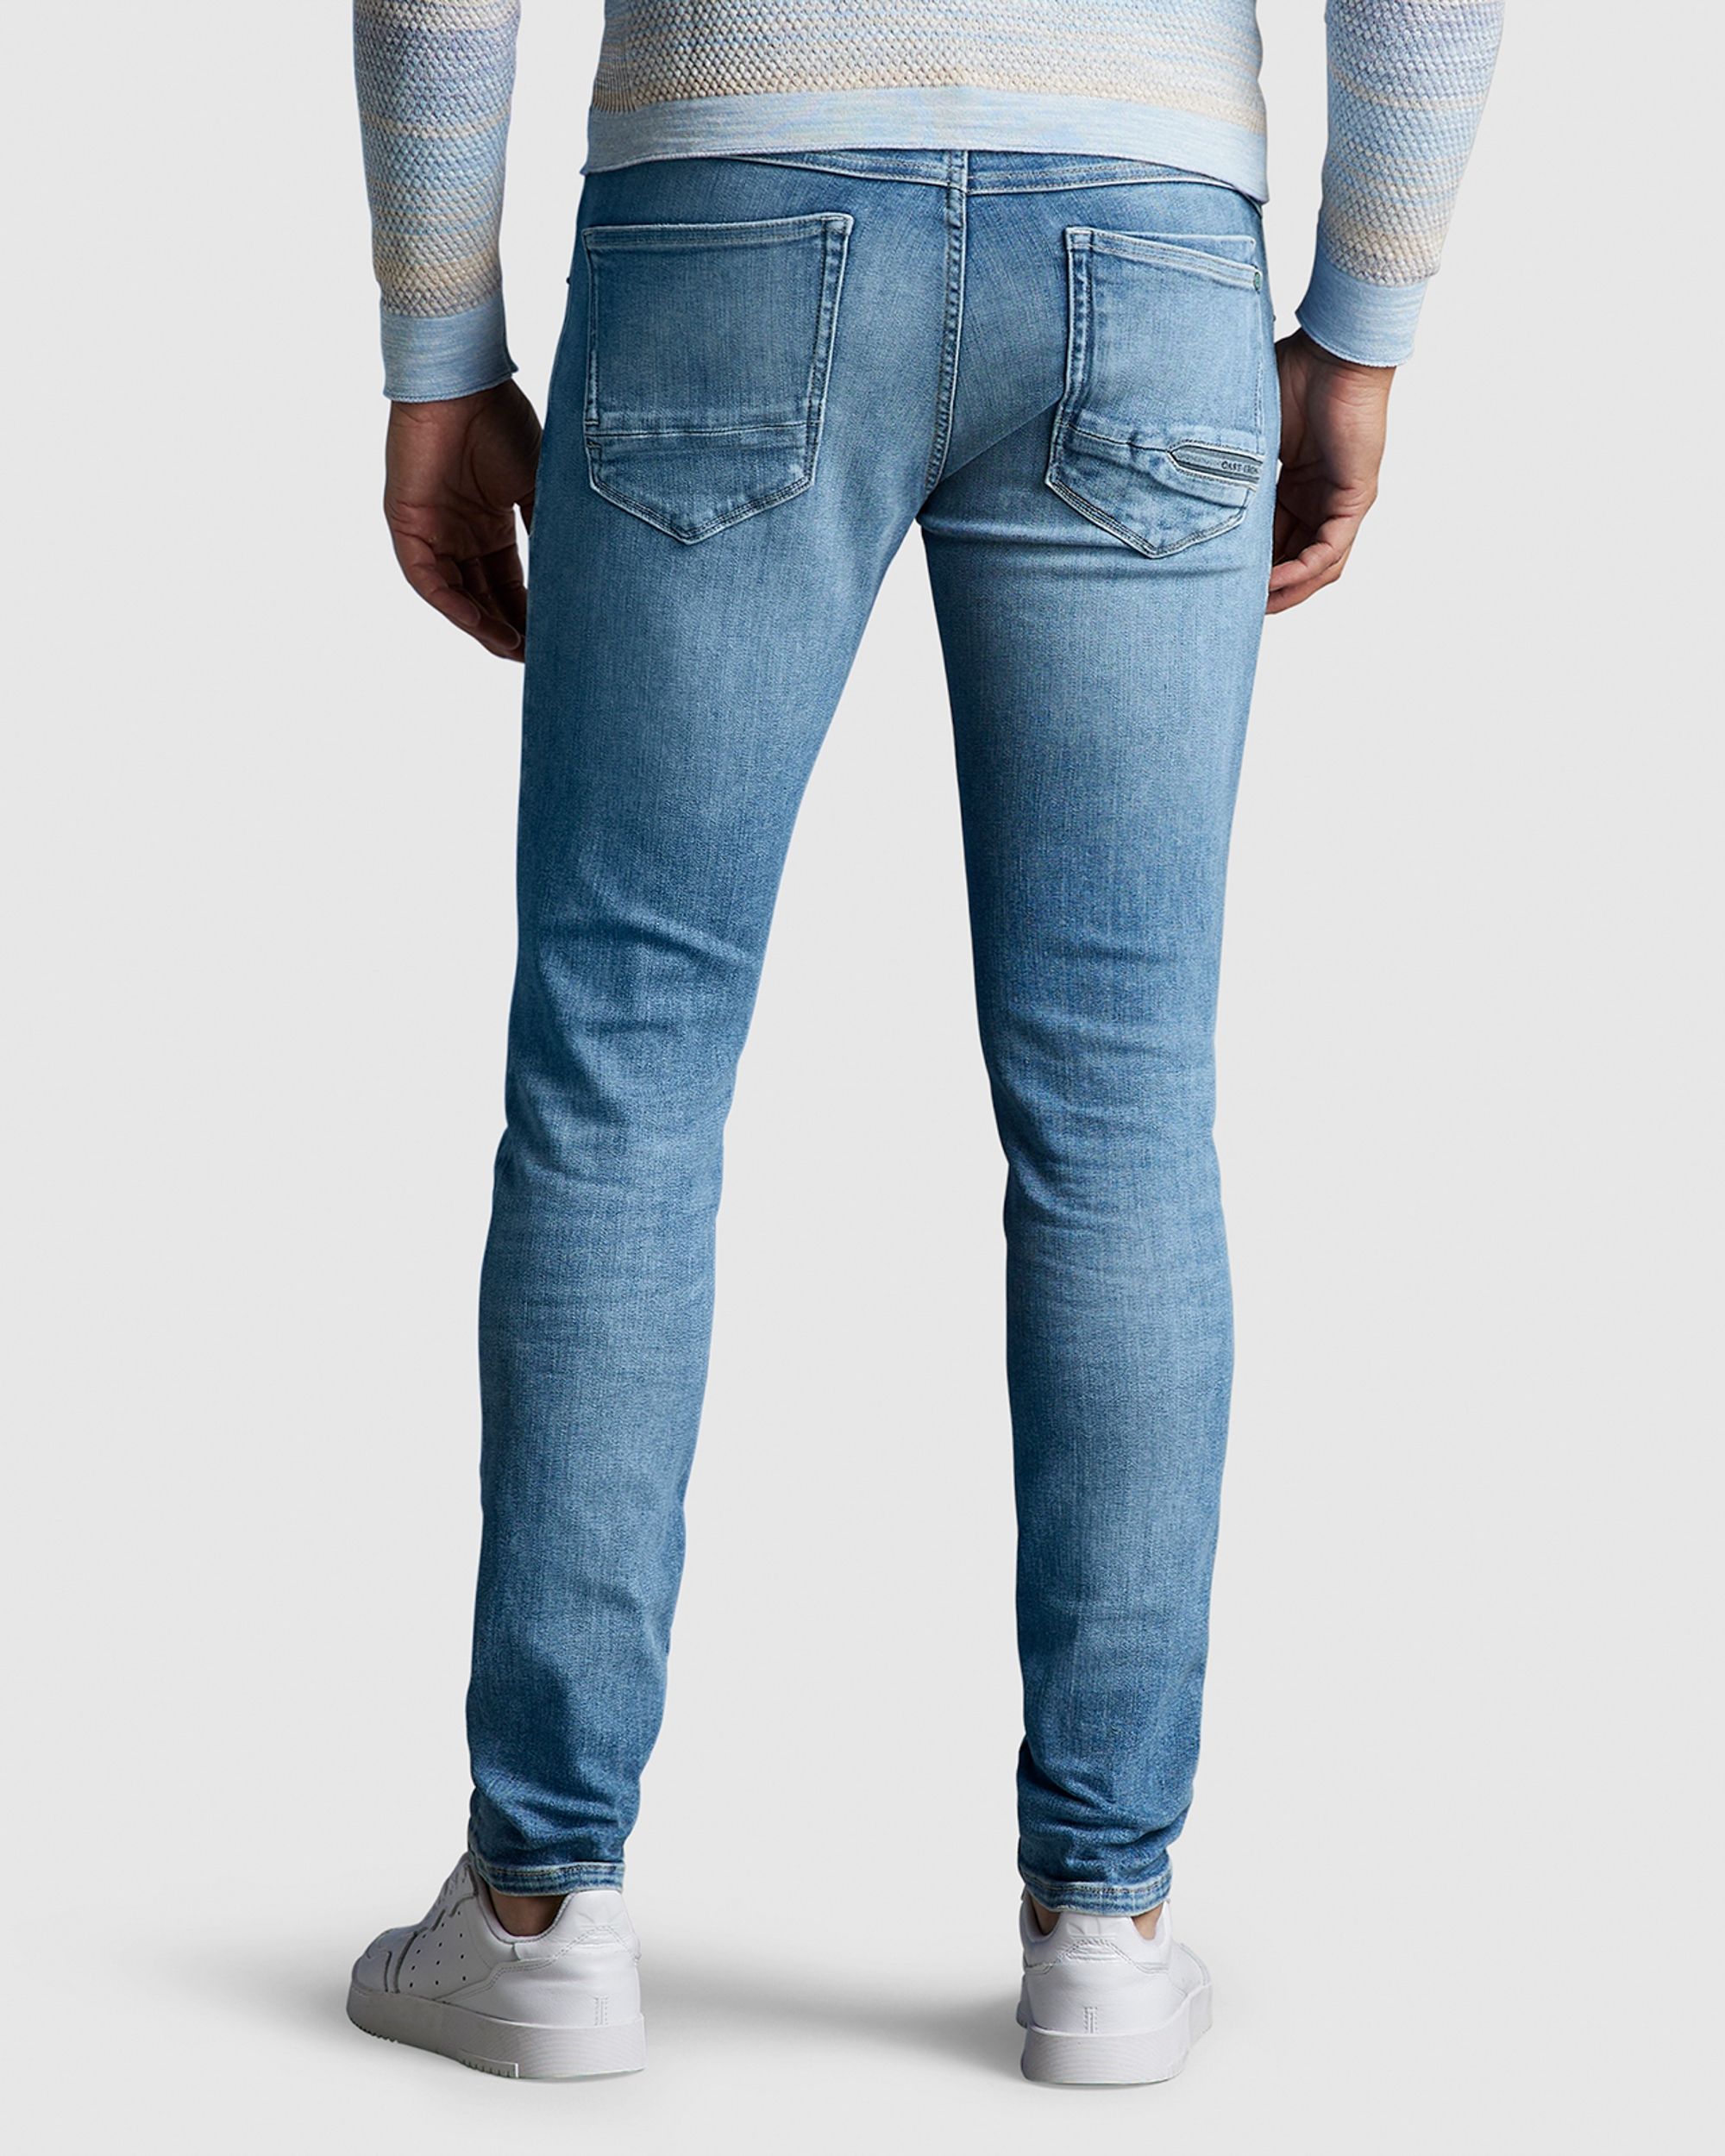 Cast Iron Shiftback MIW Jeans Blauw 085494-001-29/32